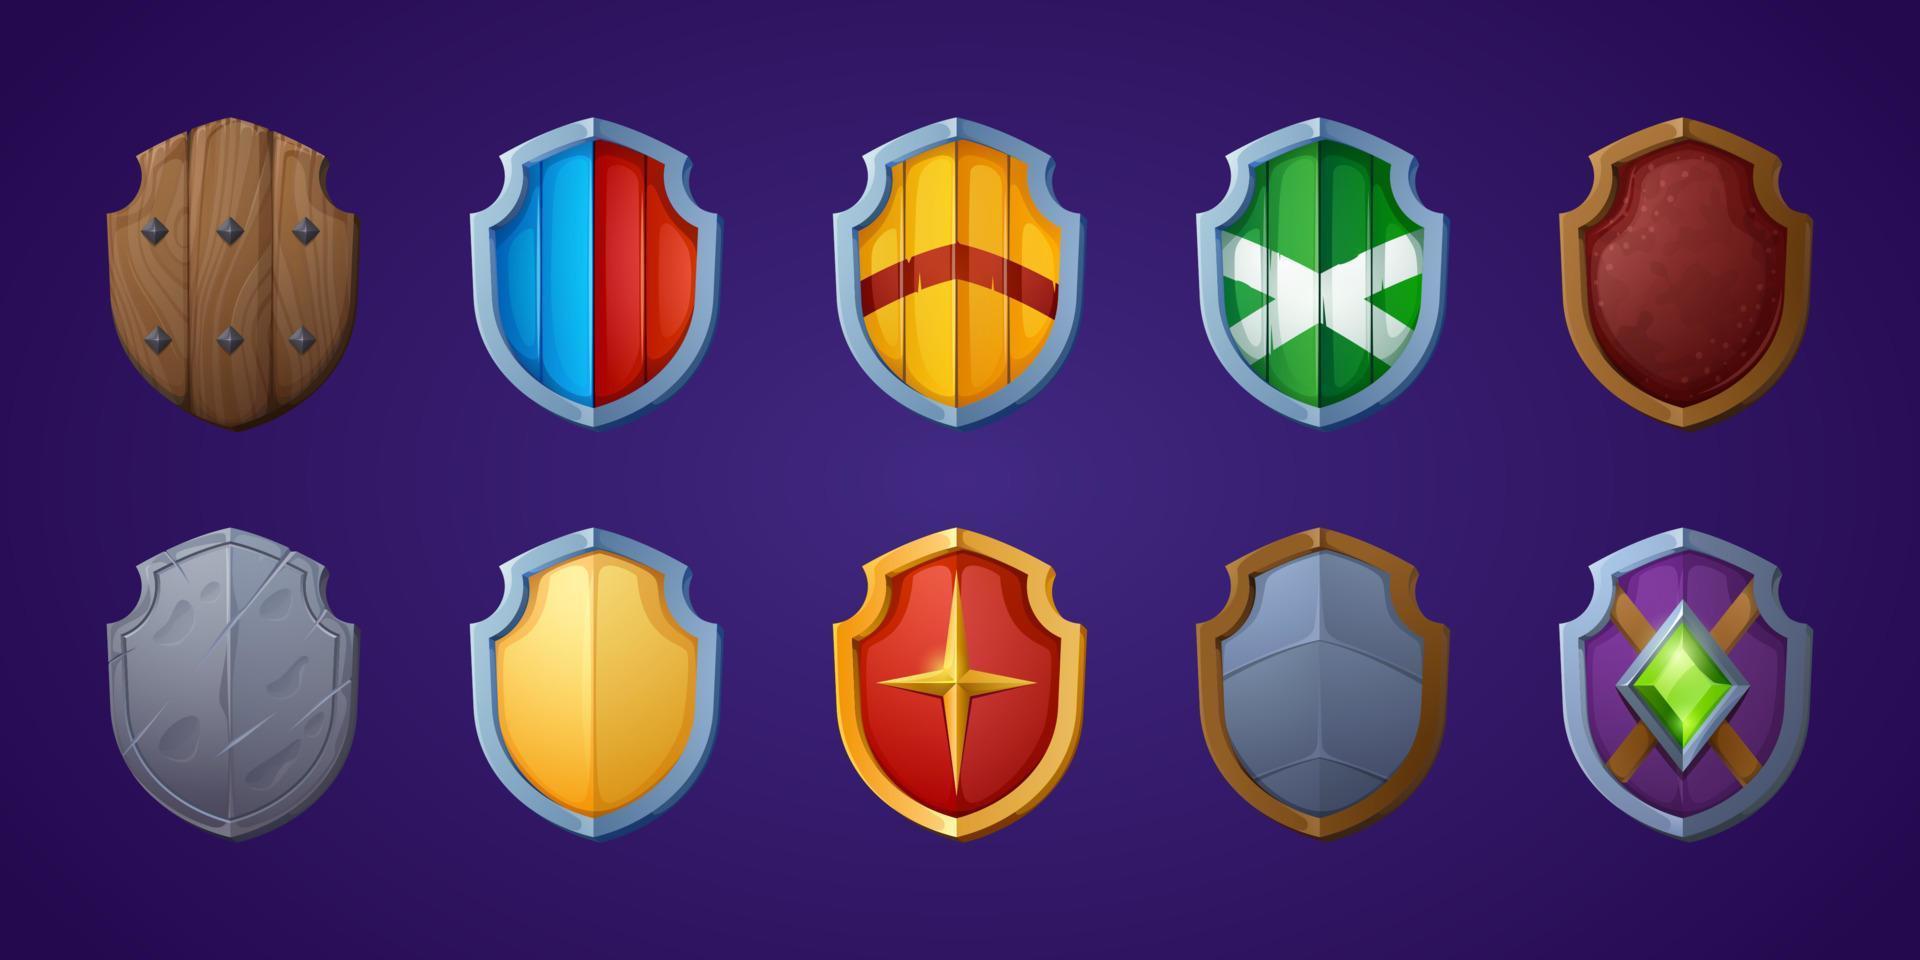 Set of game shields cartoon fantasy medieval armor vector